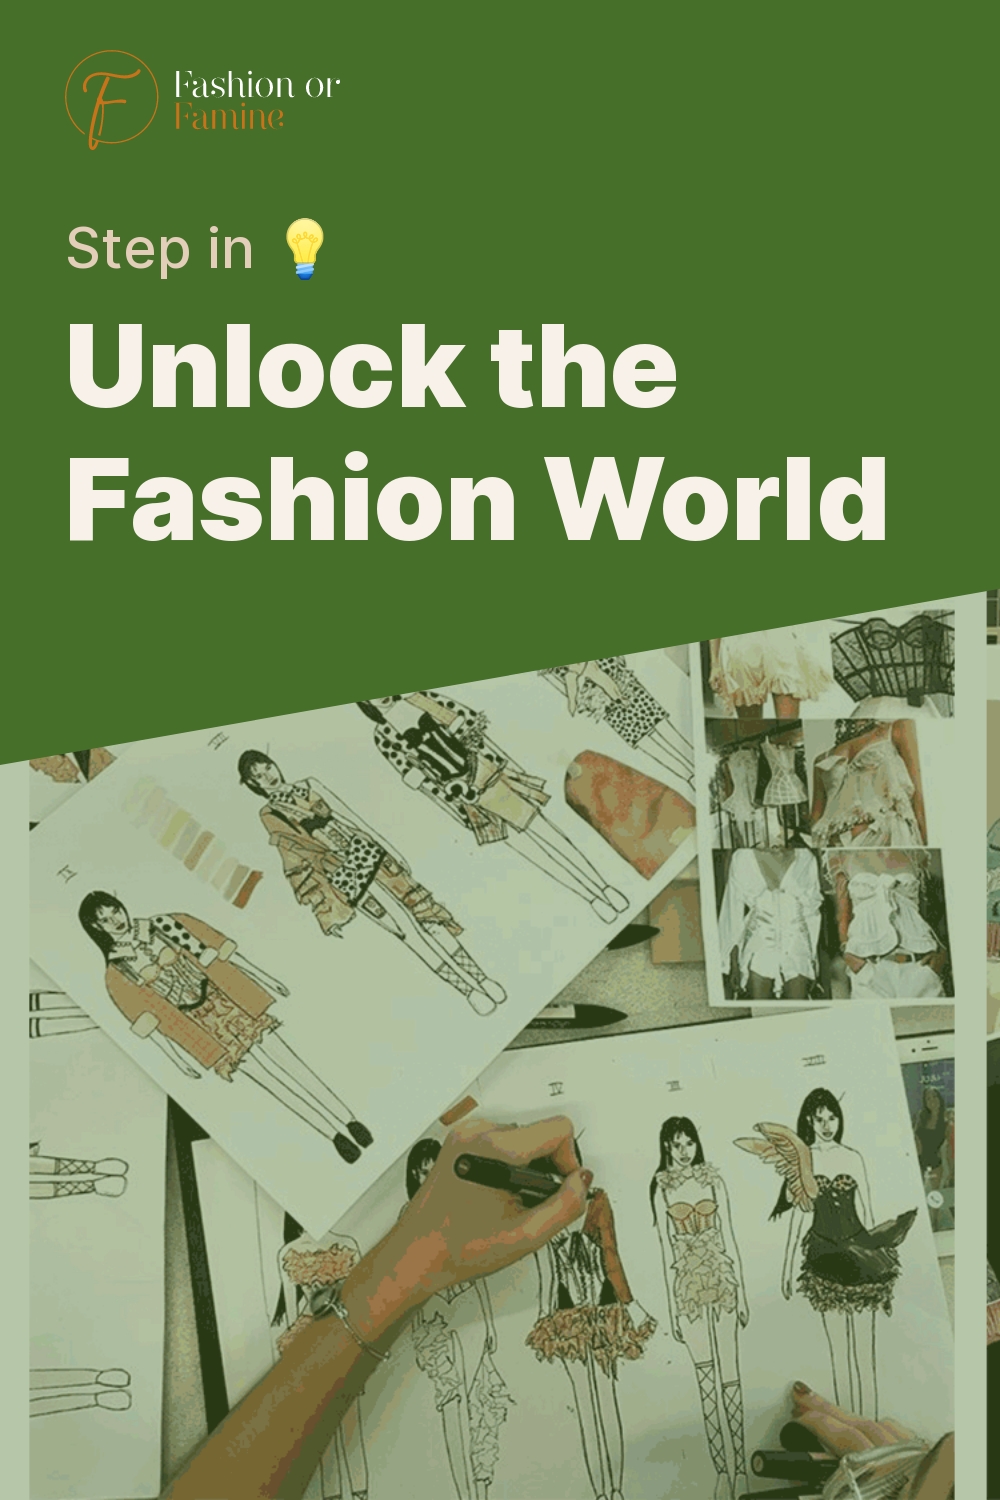 Unlock the Fashion World - Step in 💡